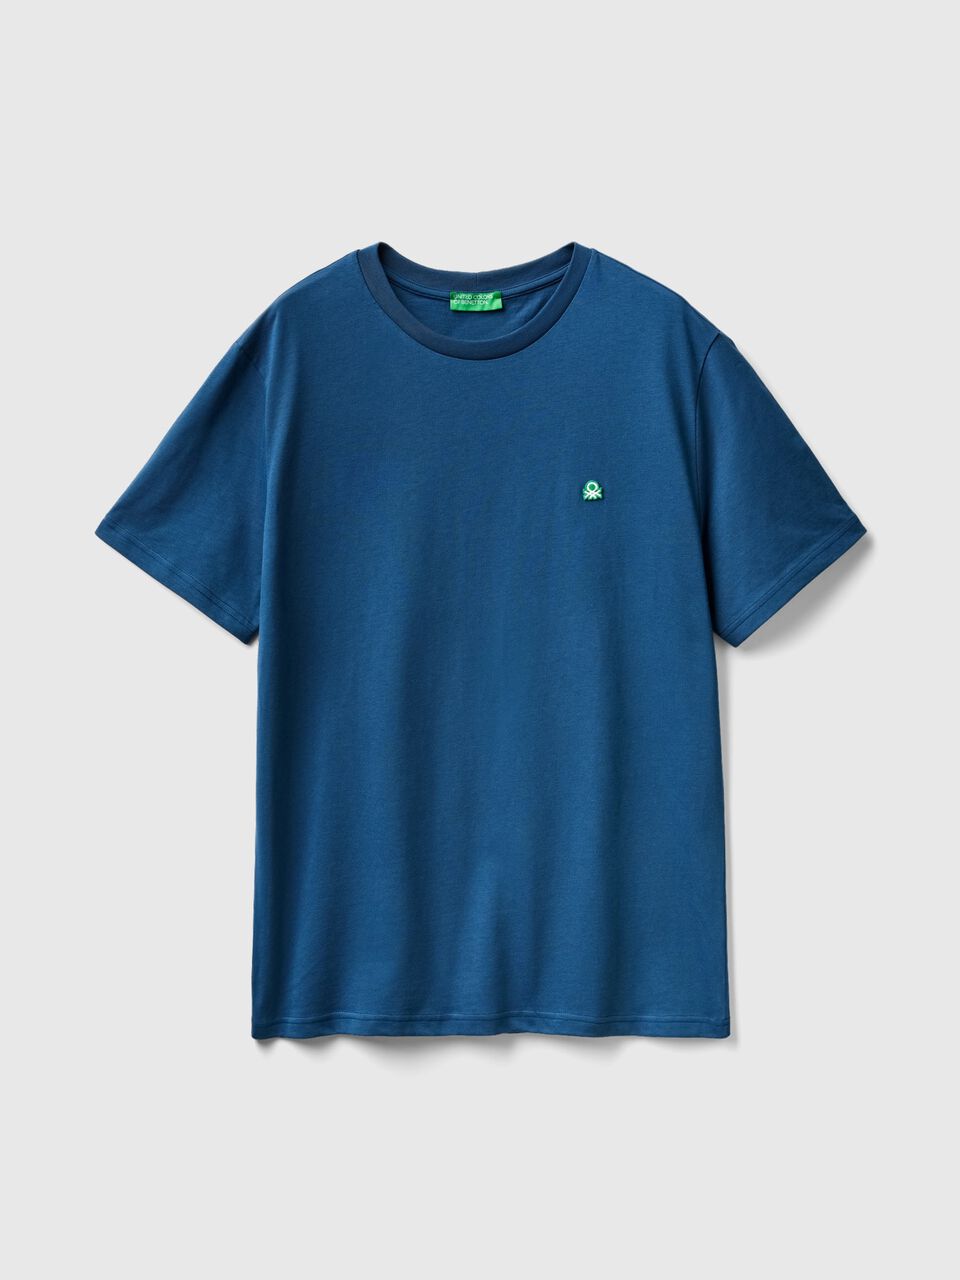 - t-shirt Air basic cotton | Force organic Blue Benetton 100%